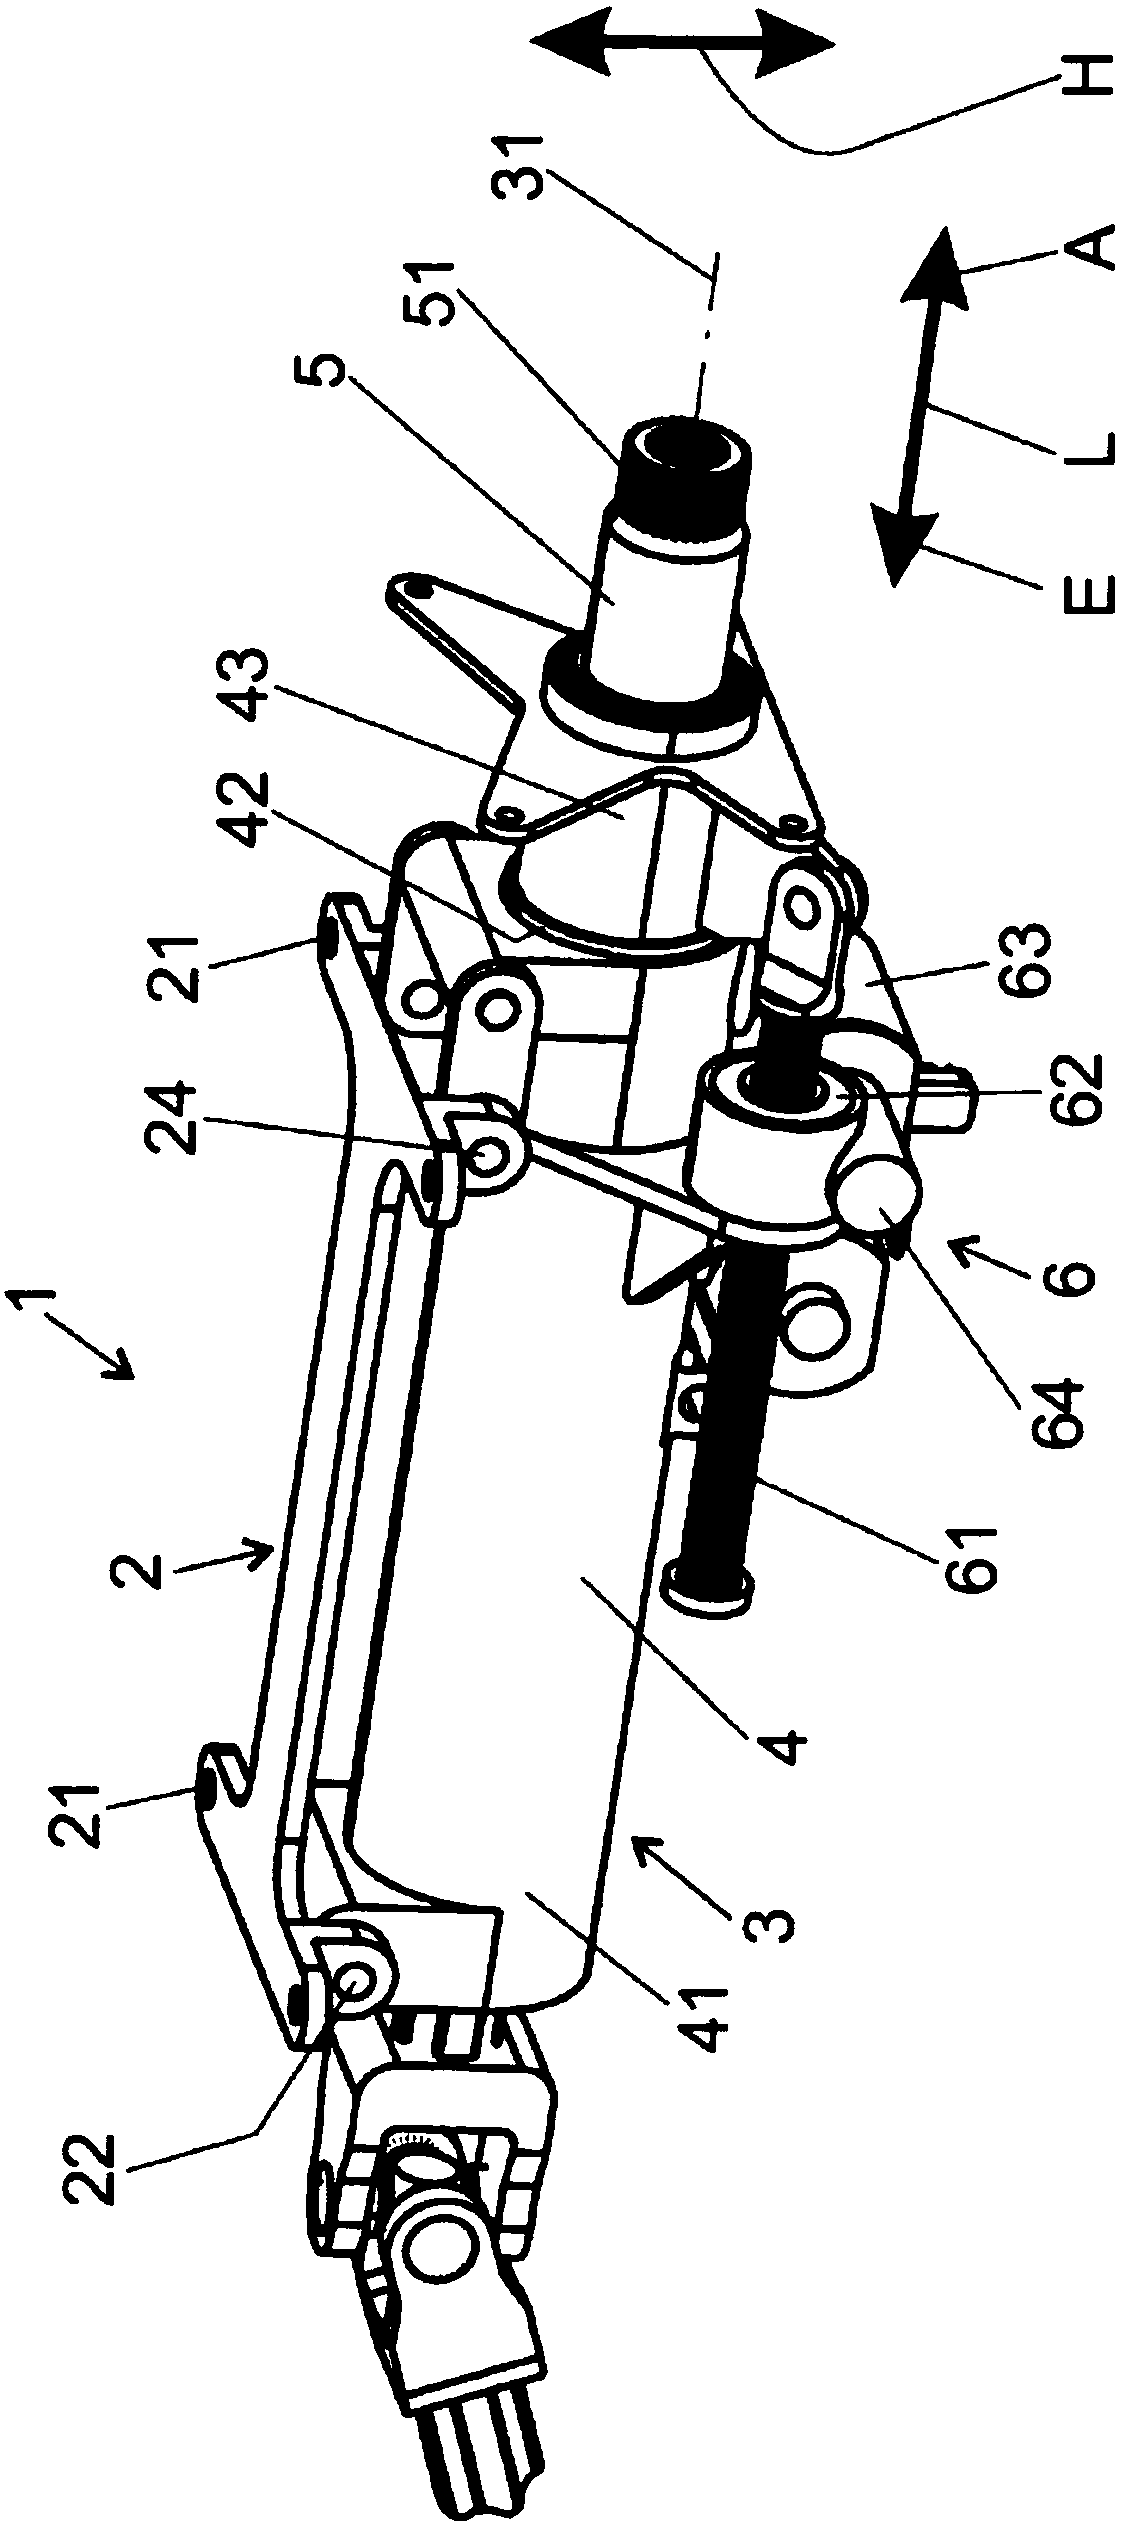 Motor-adjustable steering column for a motor vehicle